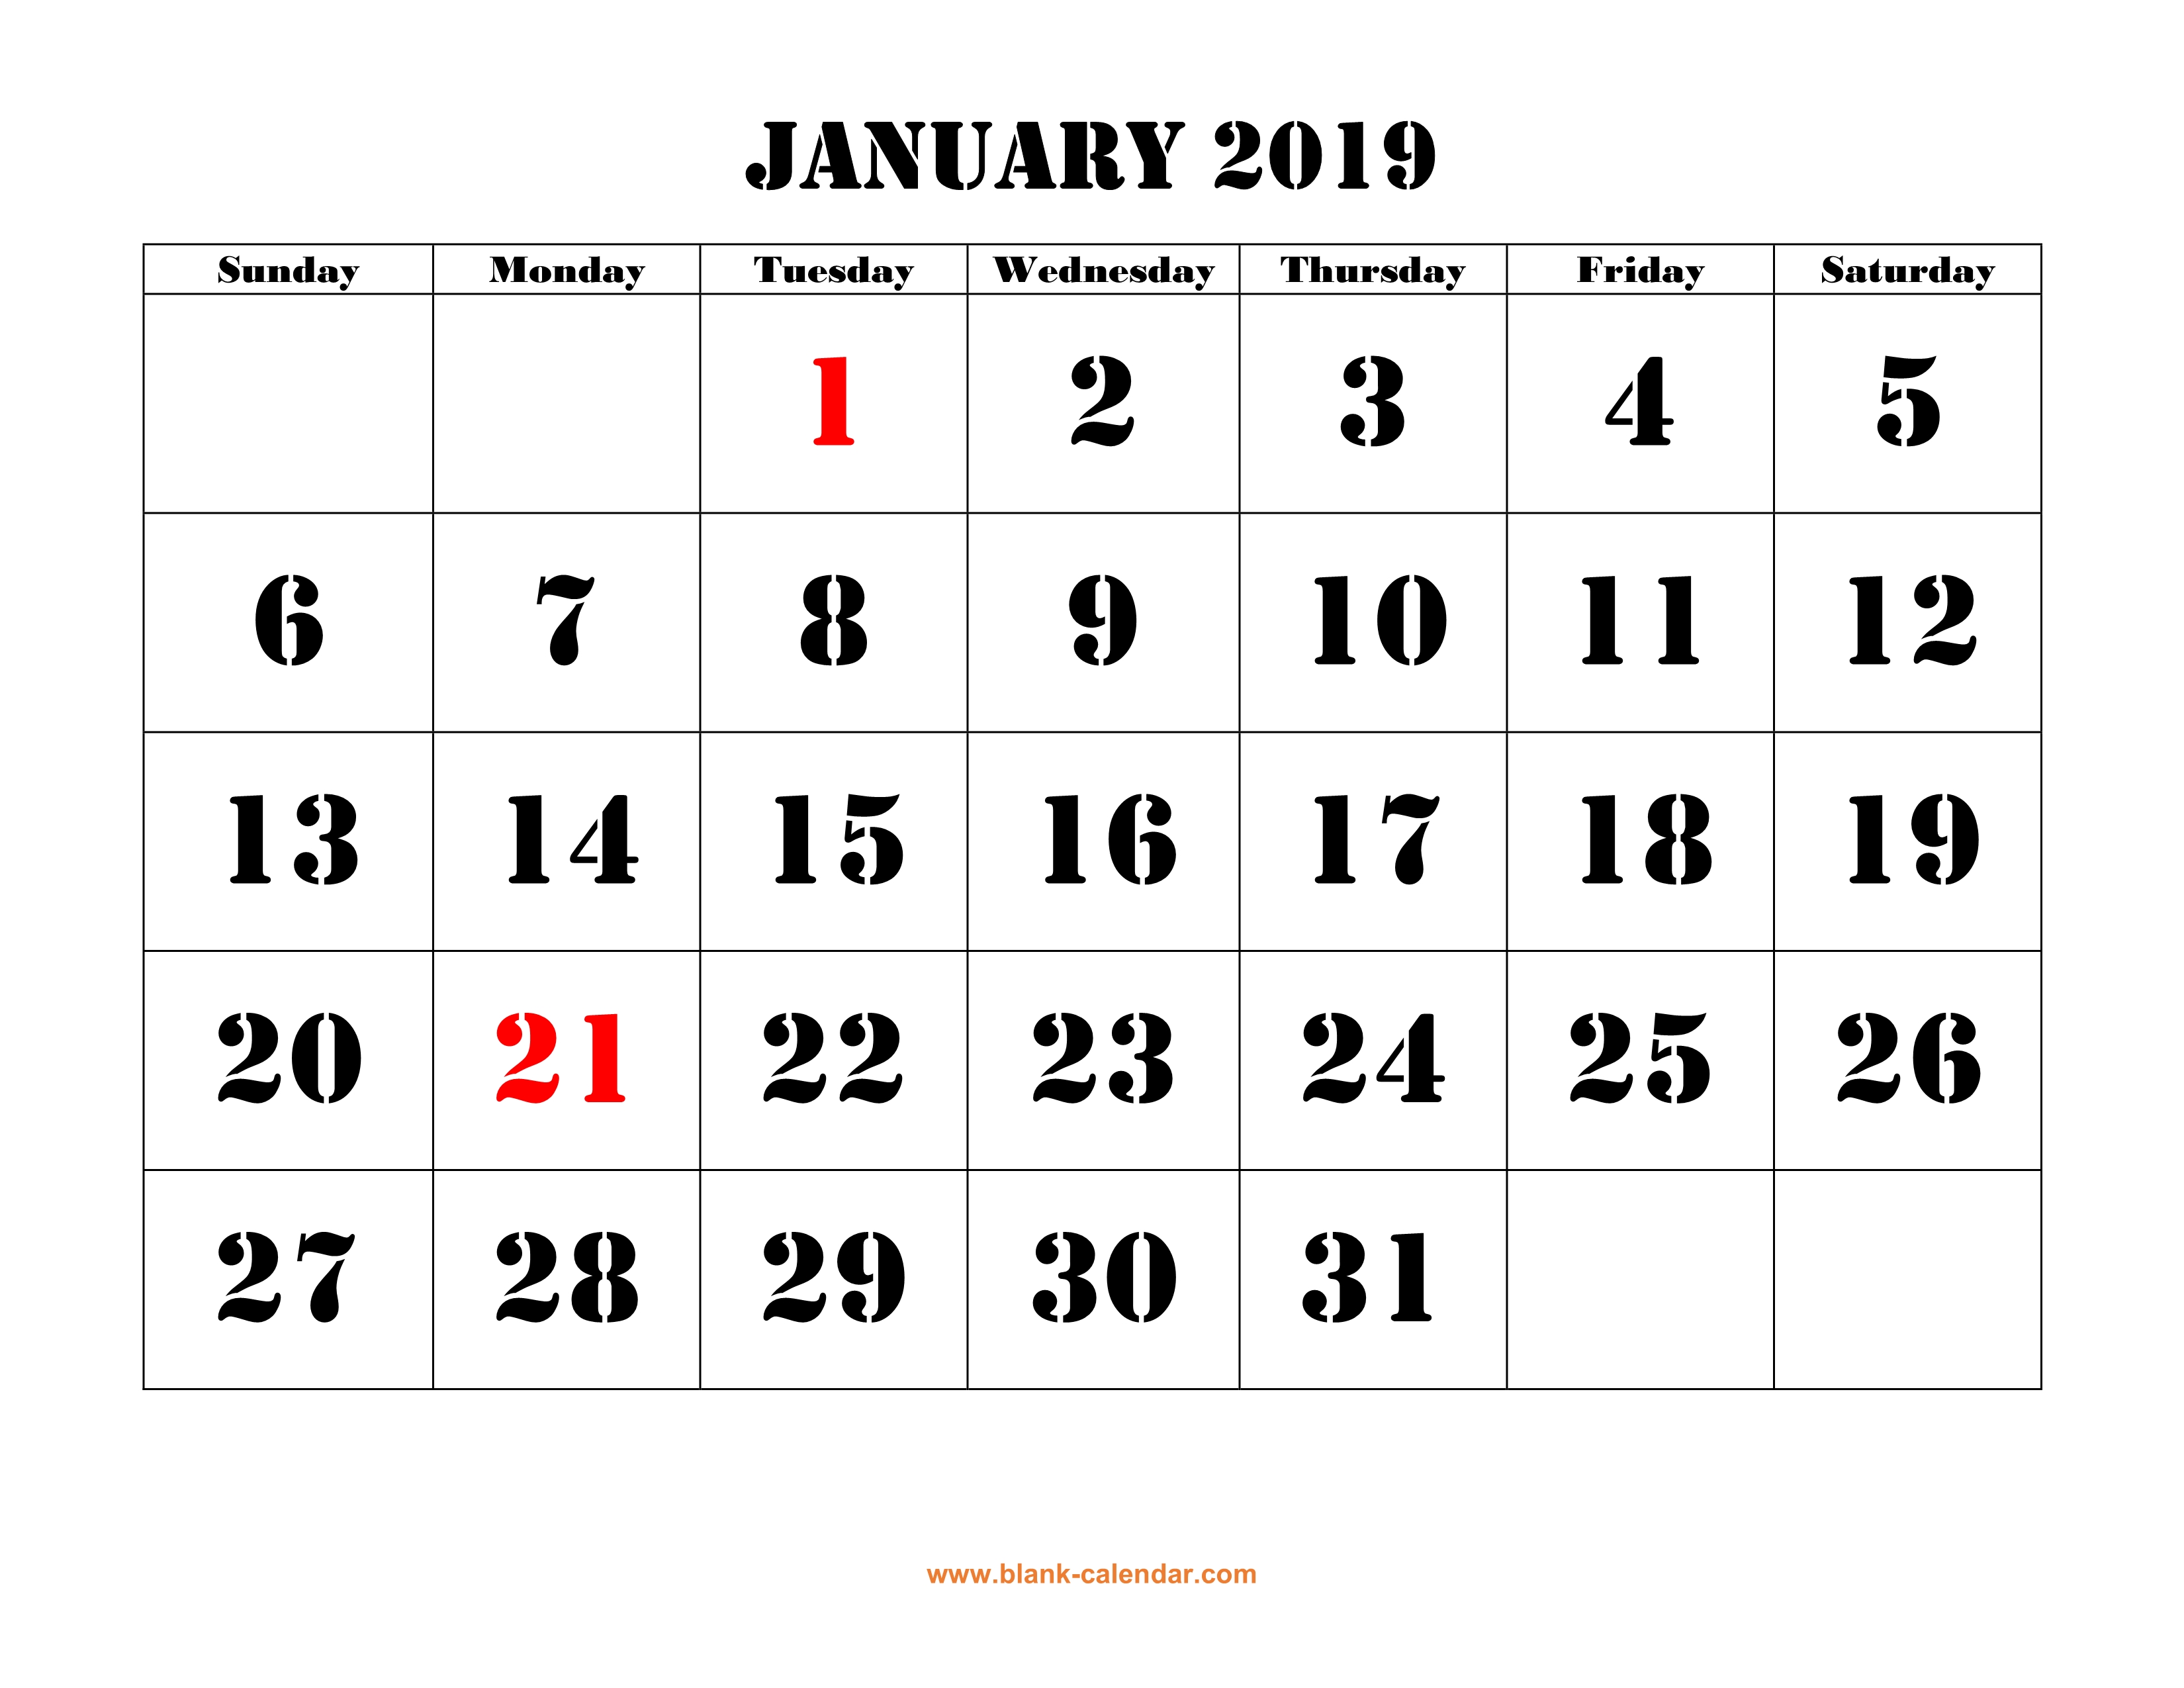 january-2019-calendar-printable-template-with-holidays